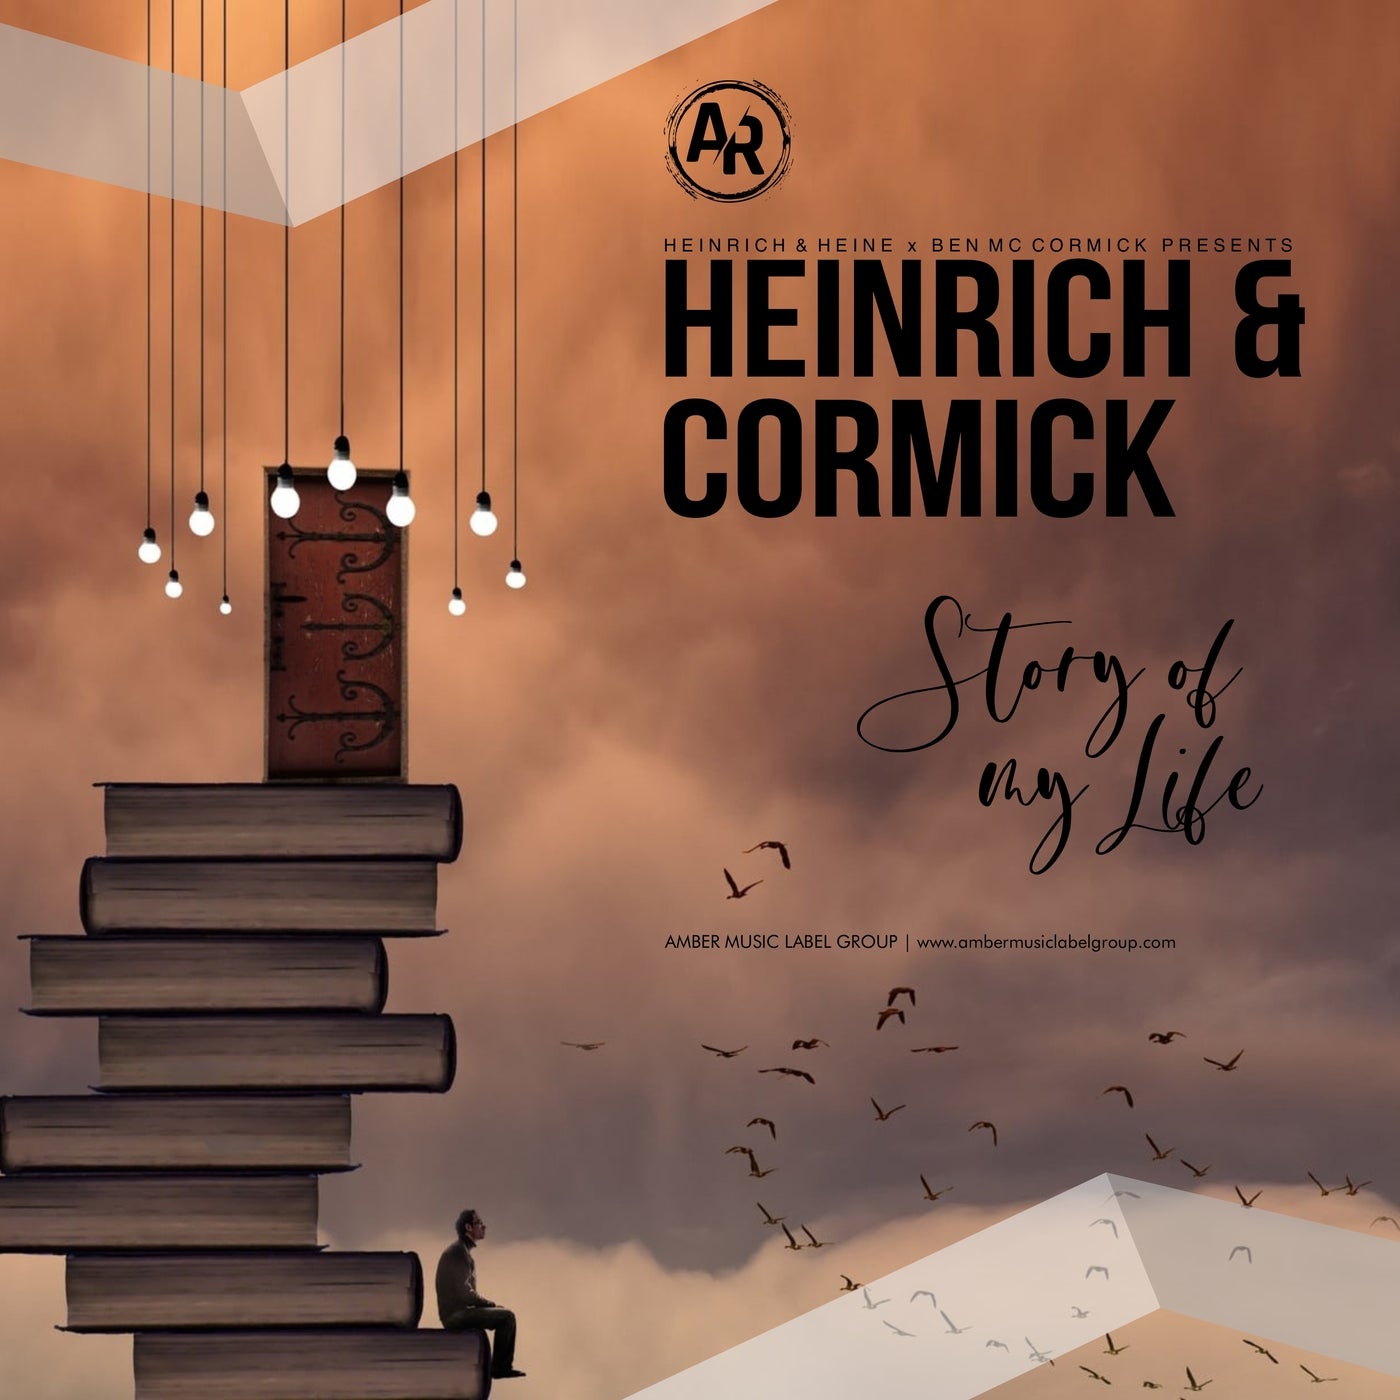 Heinrich & Heine x Ben Mc Cormick feat. Heinrich & Cormick - Story Of My Life (Original Mix)